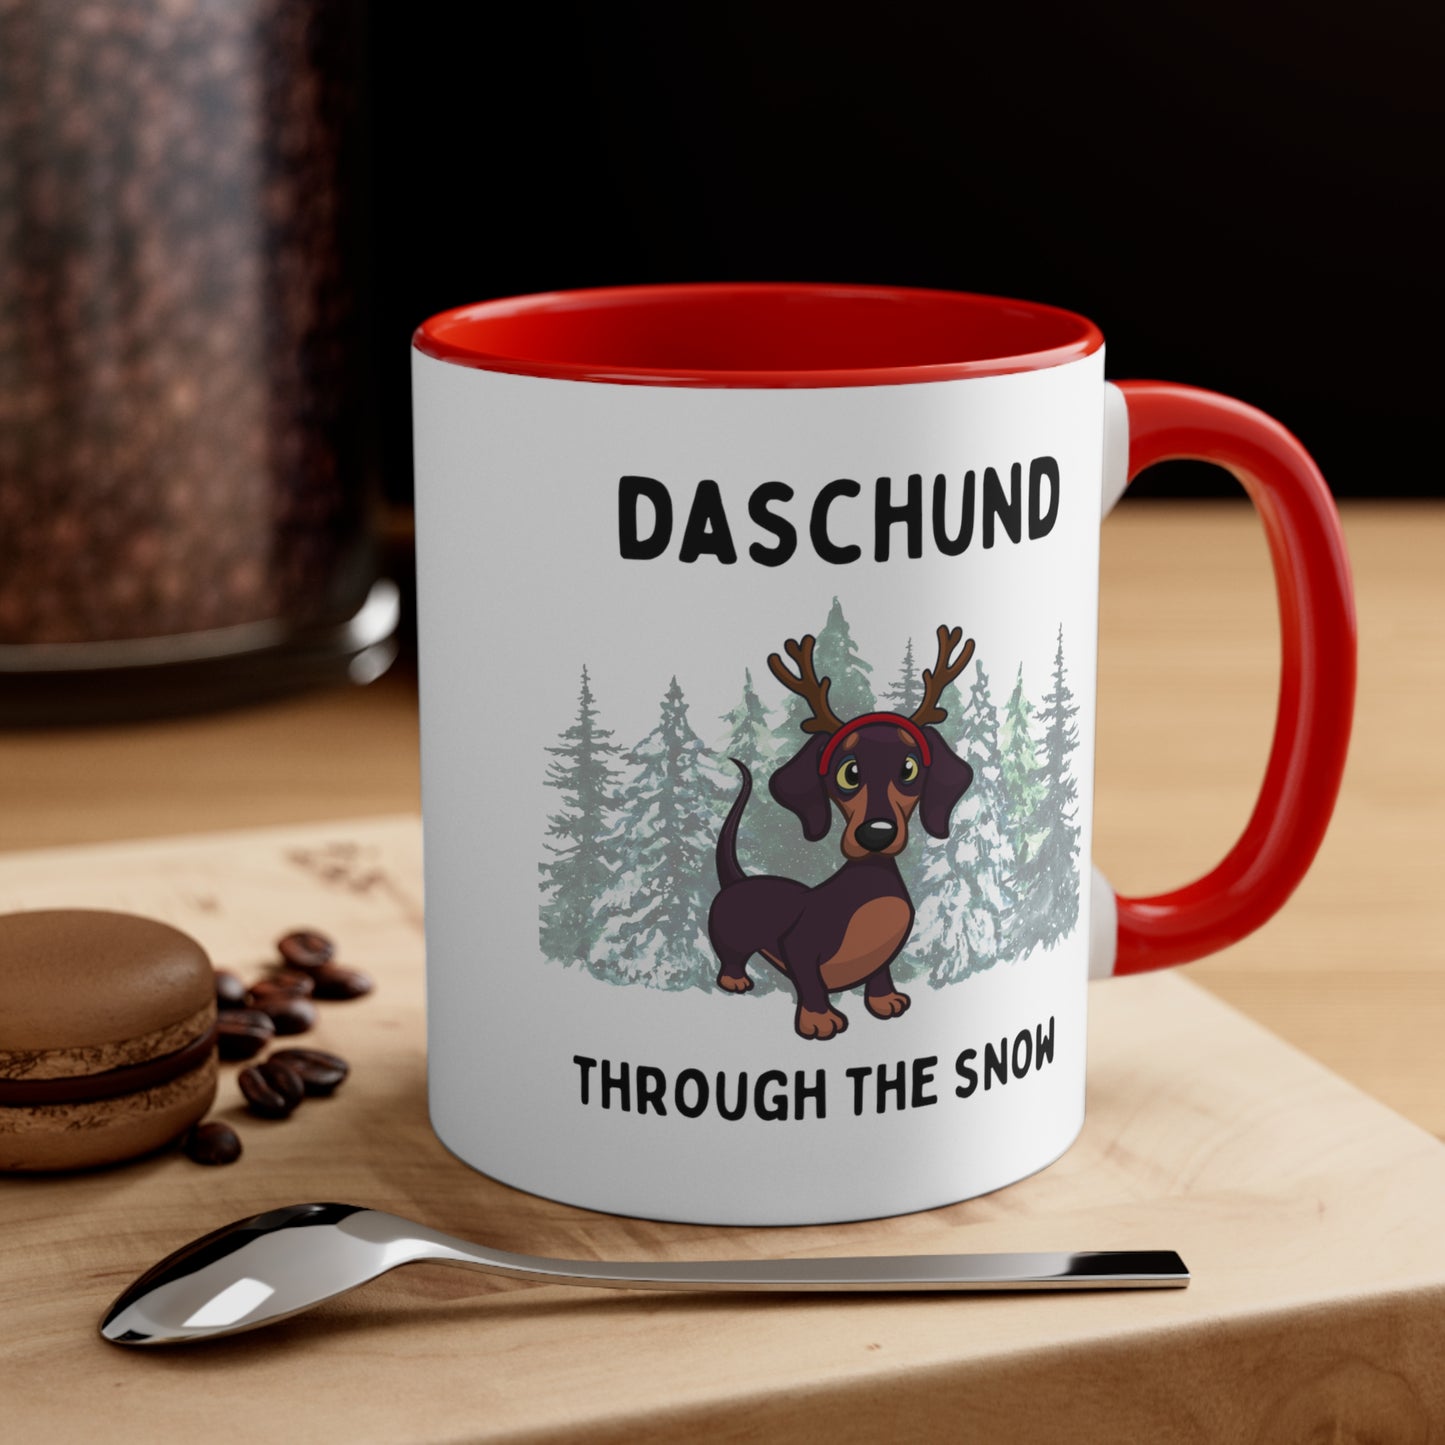 Daschund Through the Snow Accent Coffee Mug, 11oz